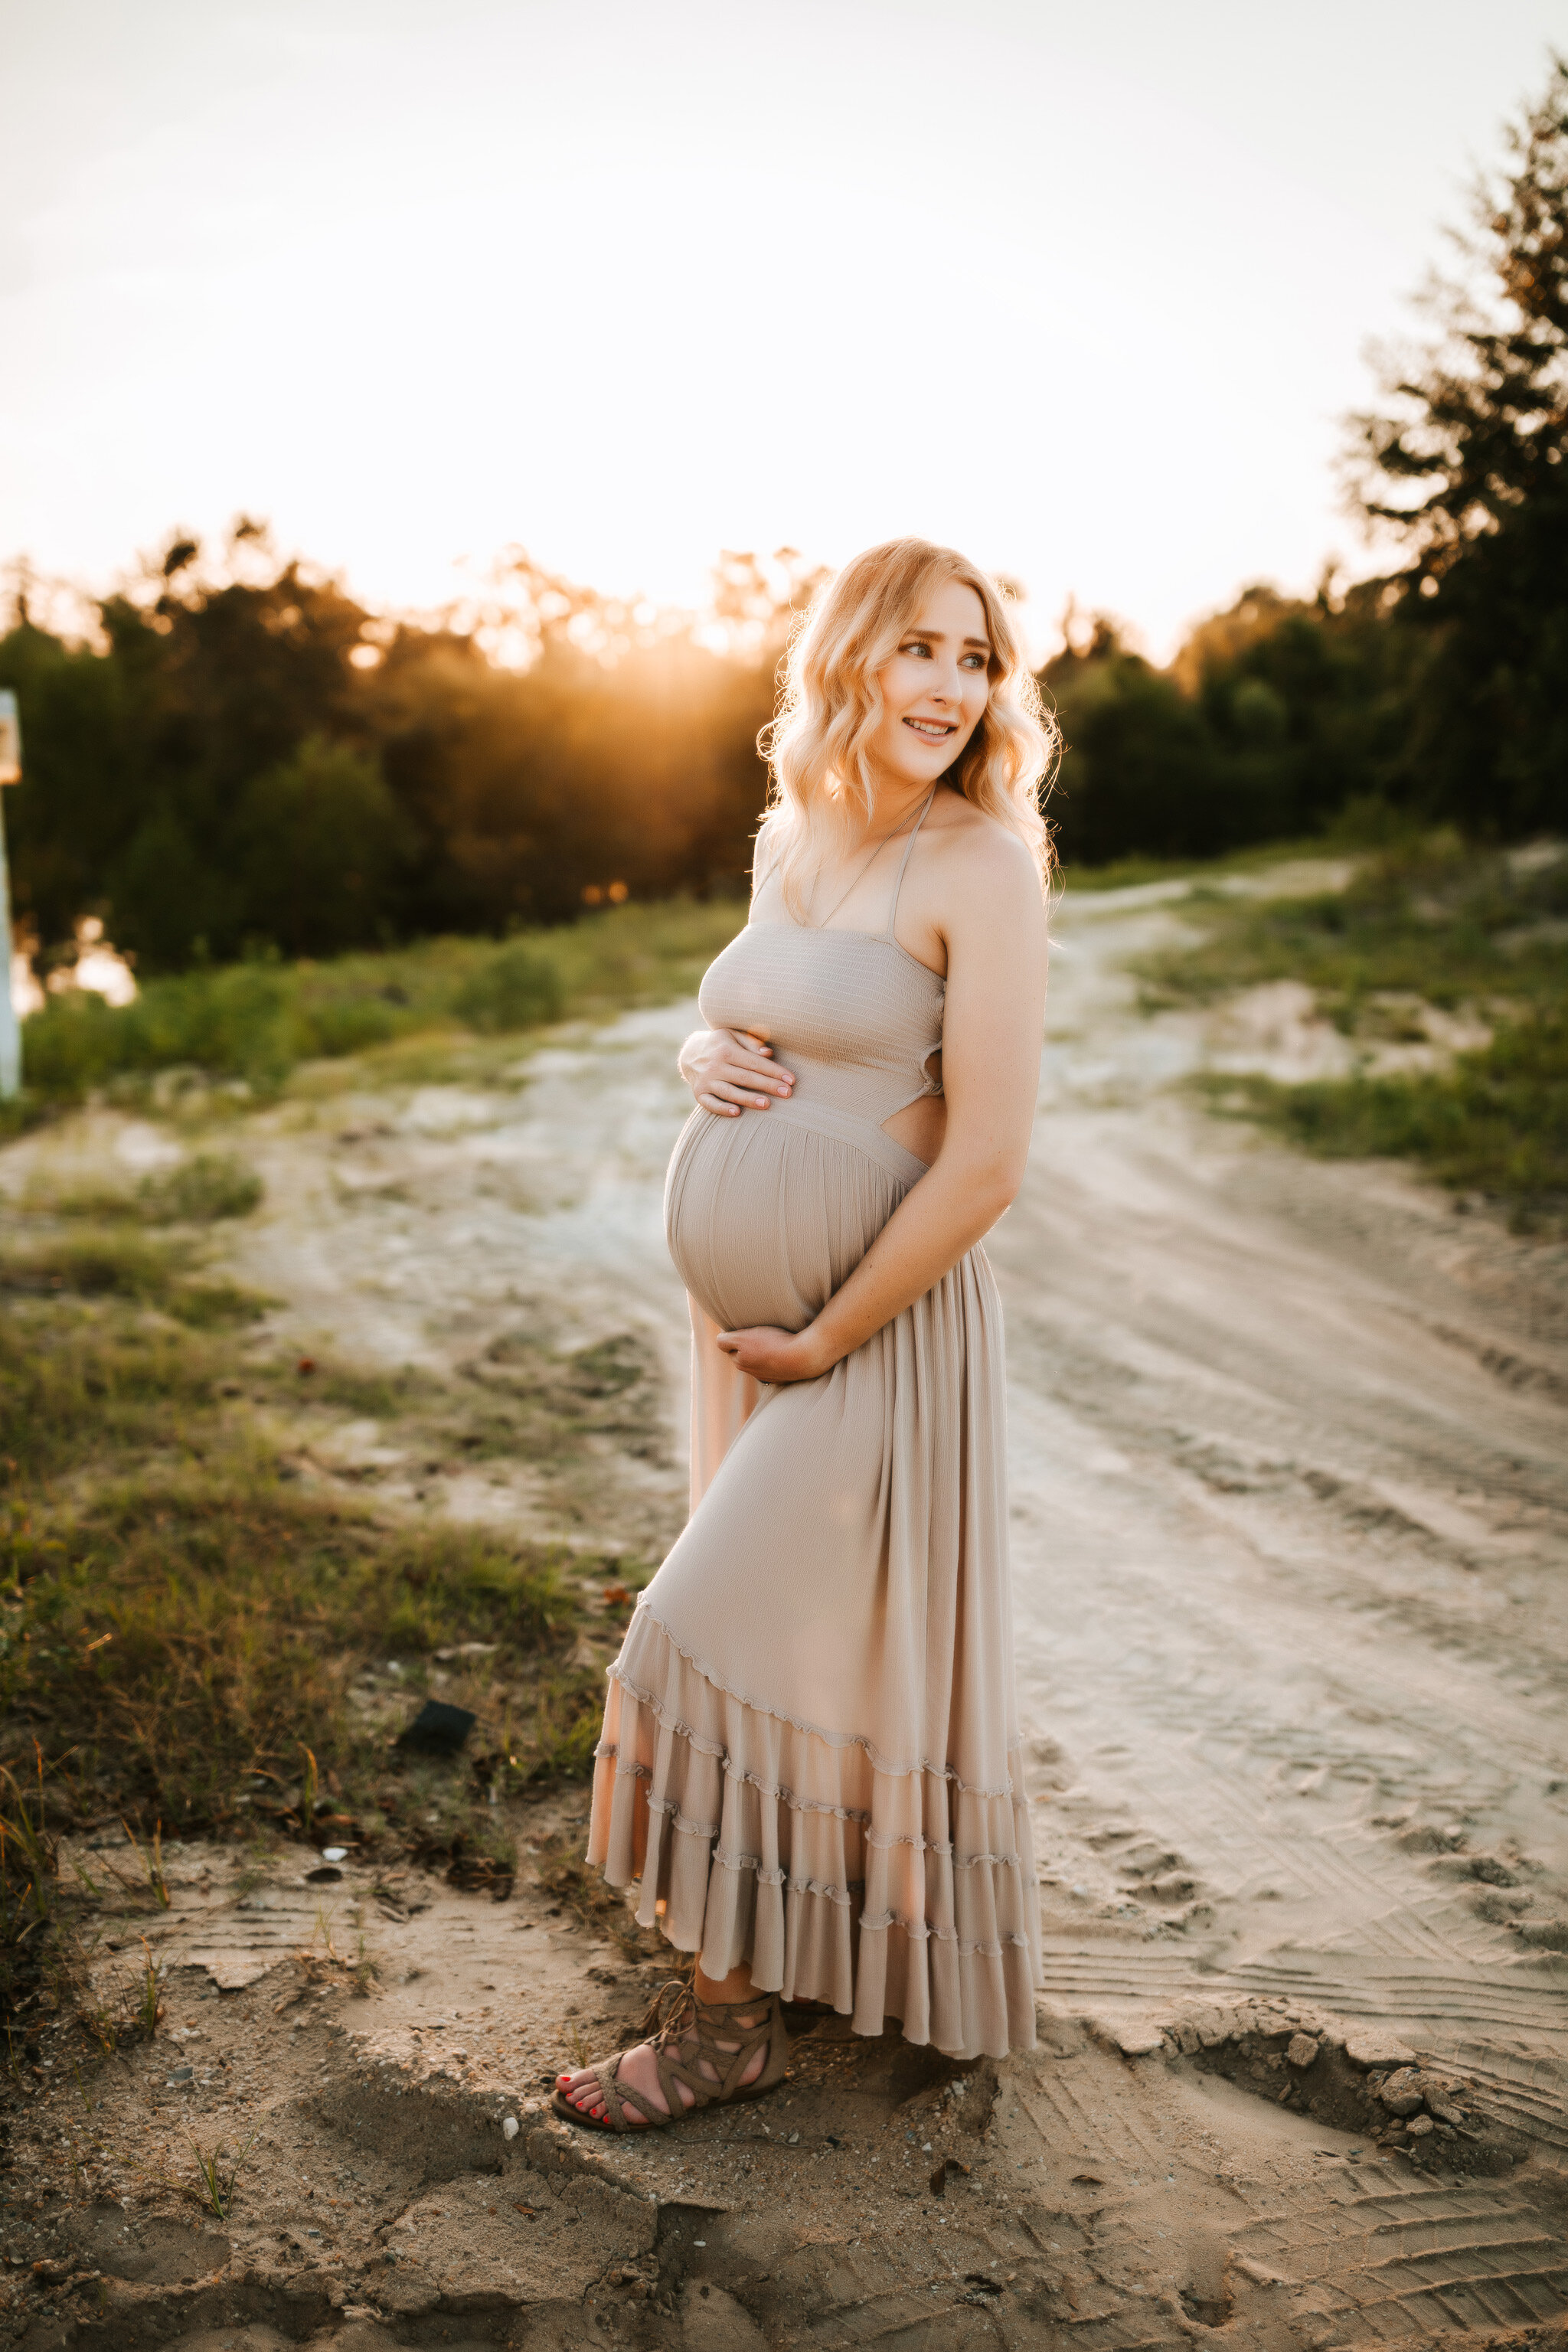 Pregnancy photoshoot ideas for couples - A-fotografy